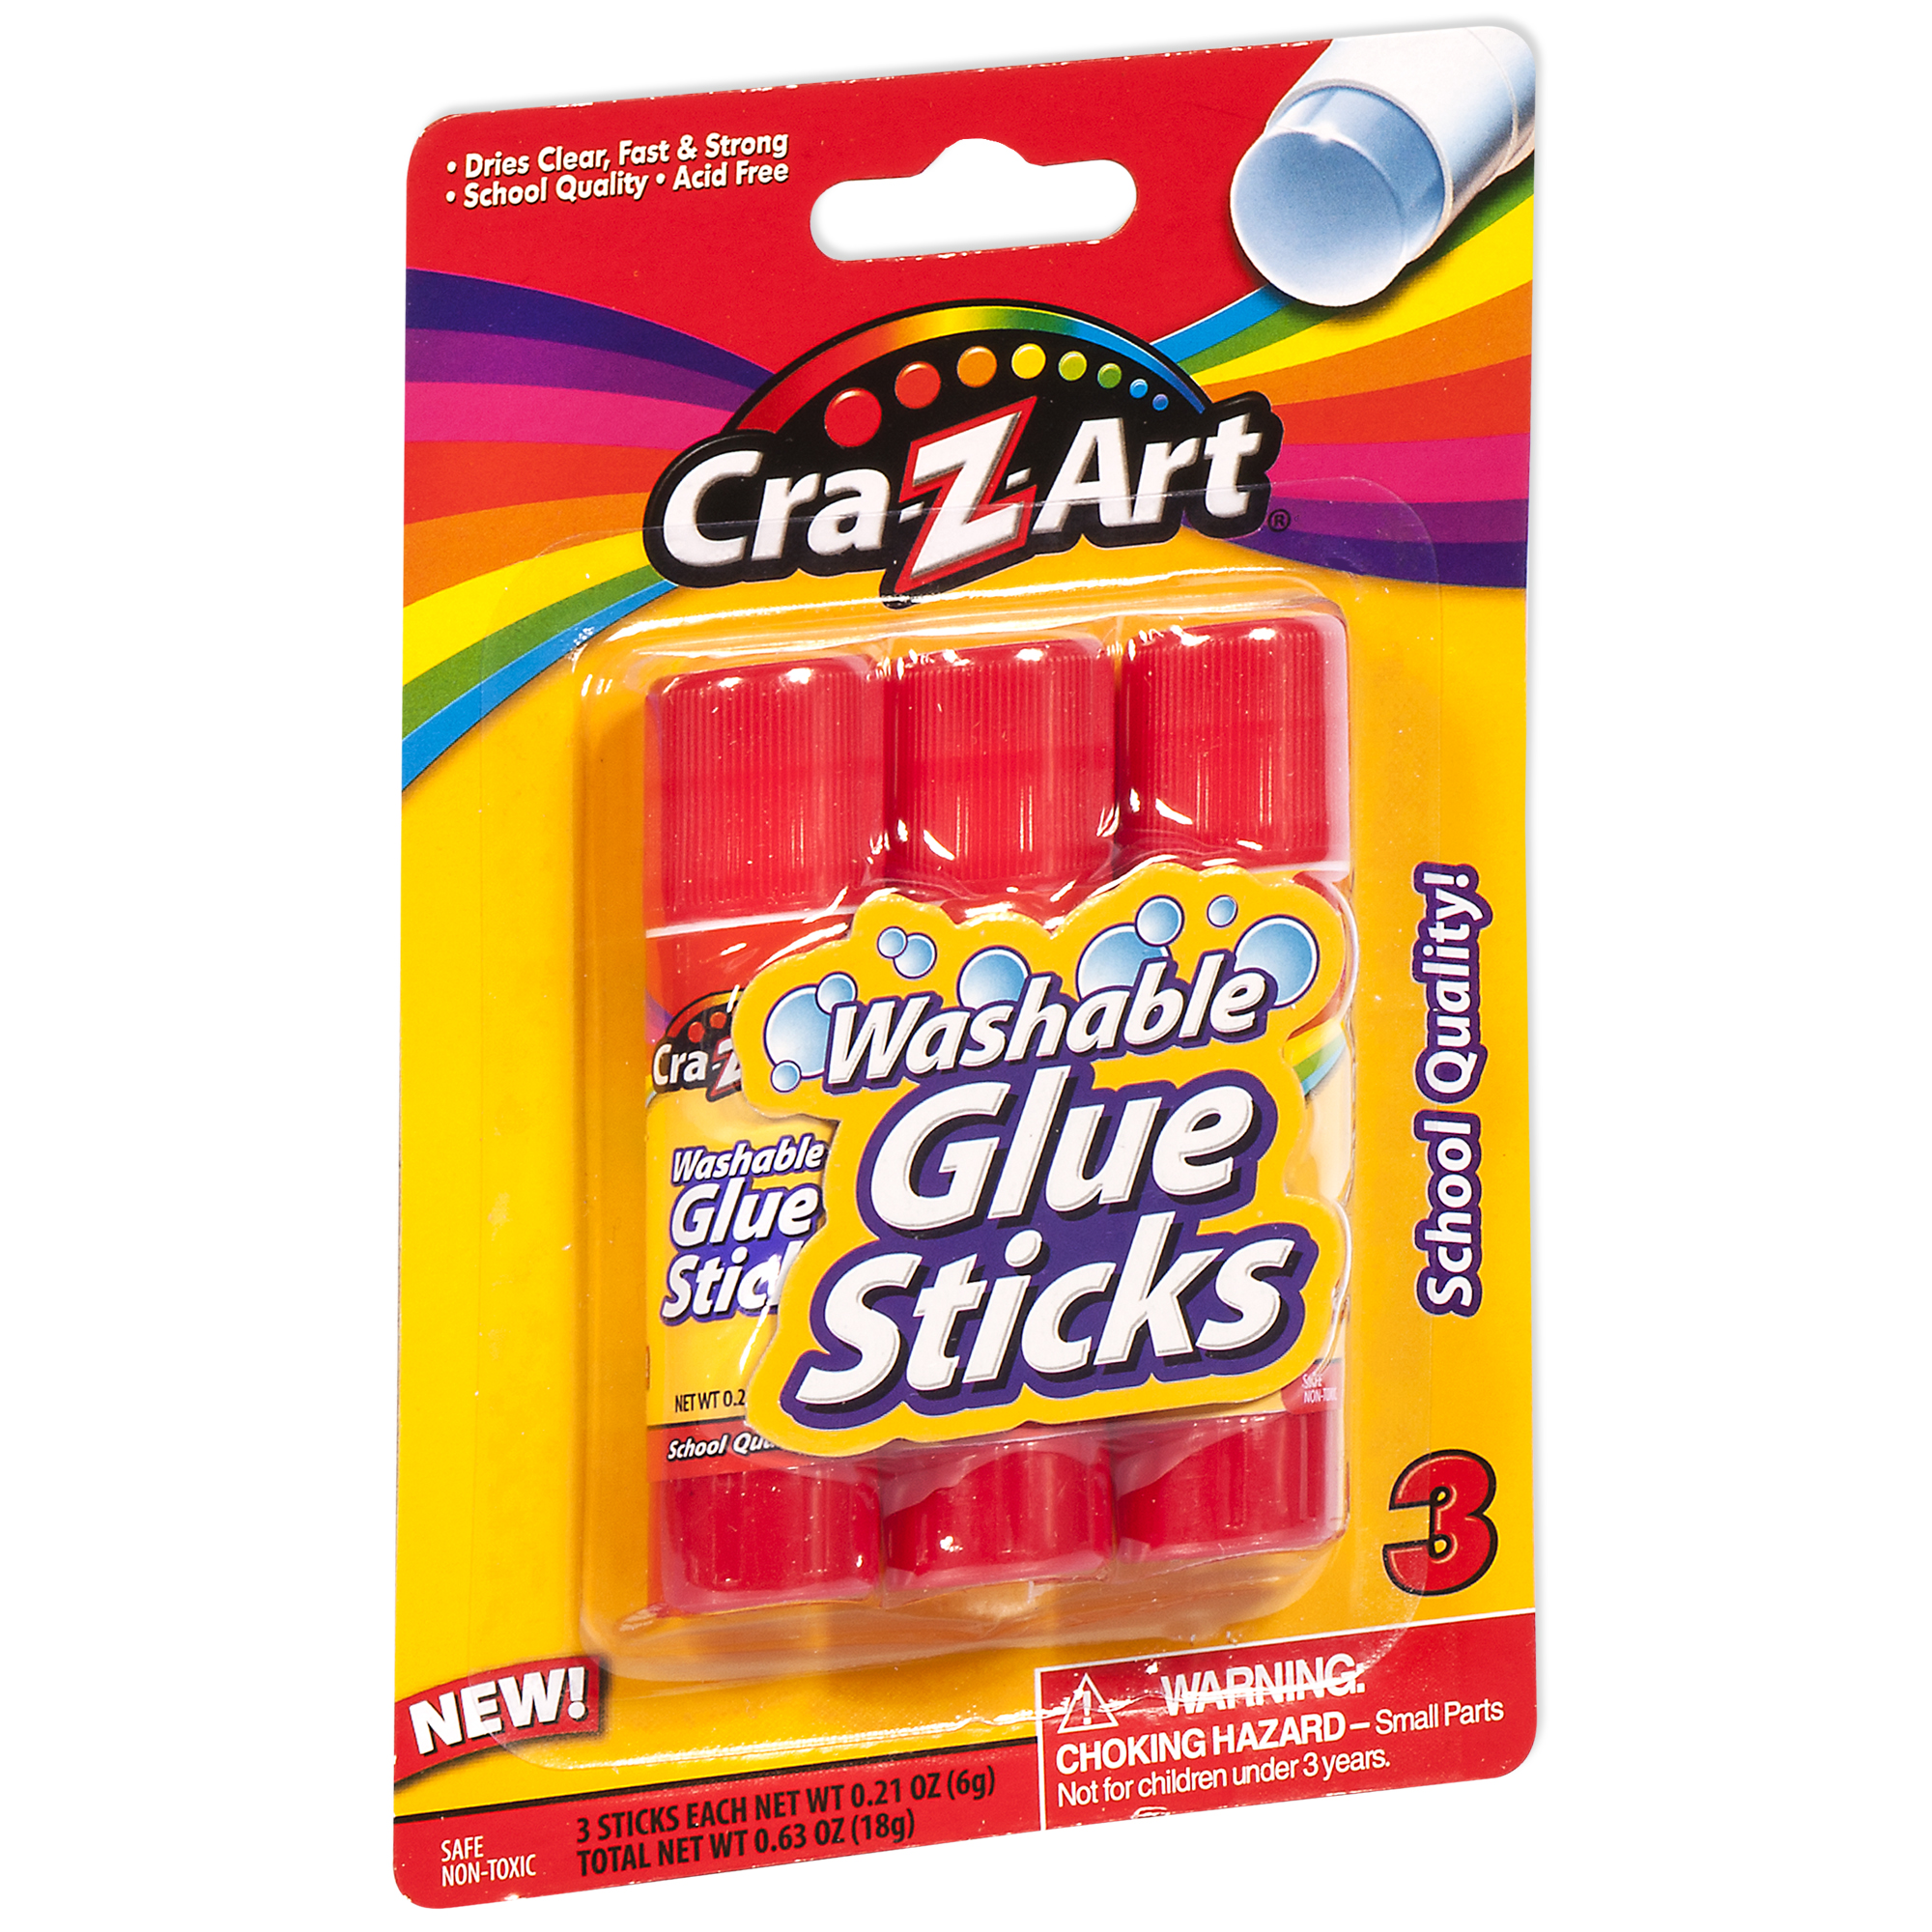 Cra-Z-Art Washable Glue Sticks, School Quality, 3 Count - image 3 of 12